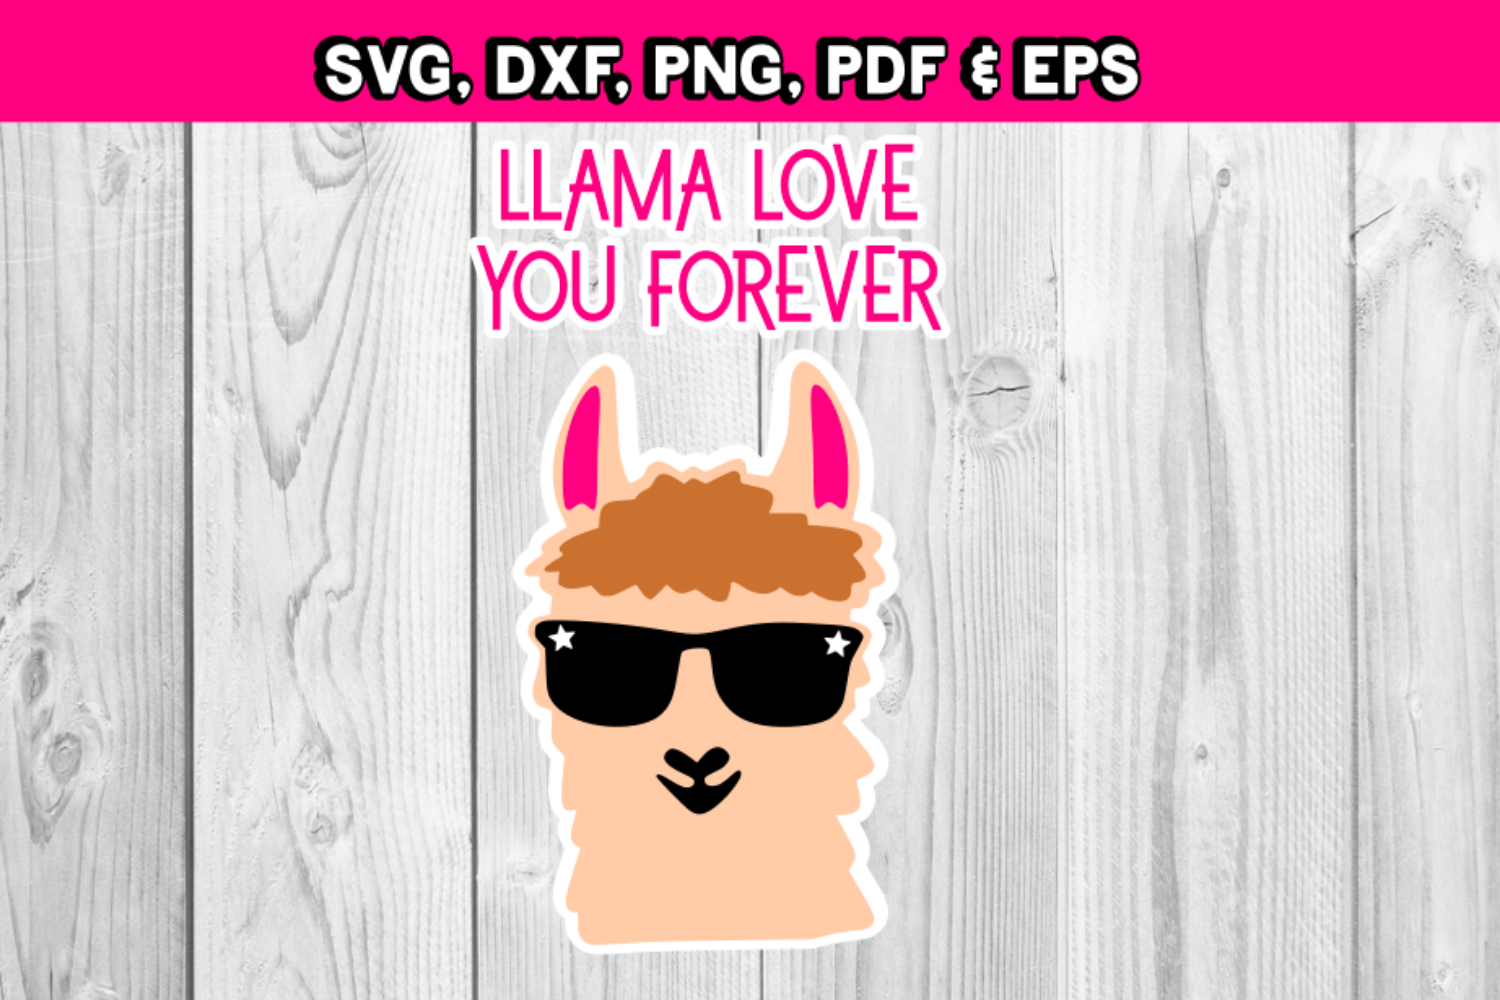 Llama svg file - Llama love you forever - layered svg file